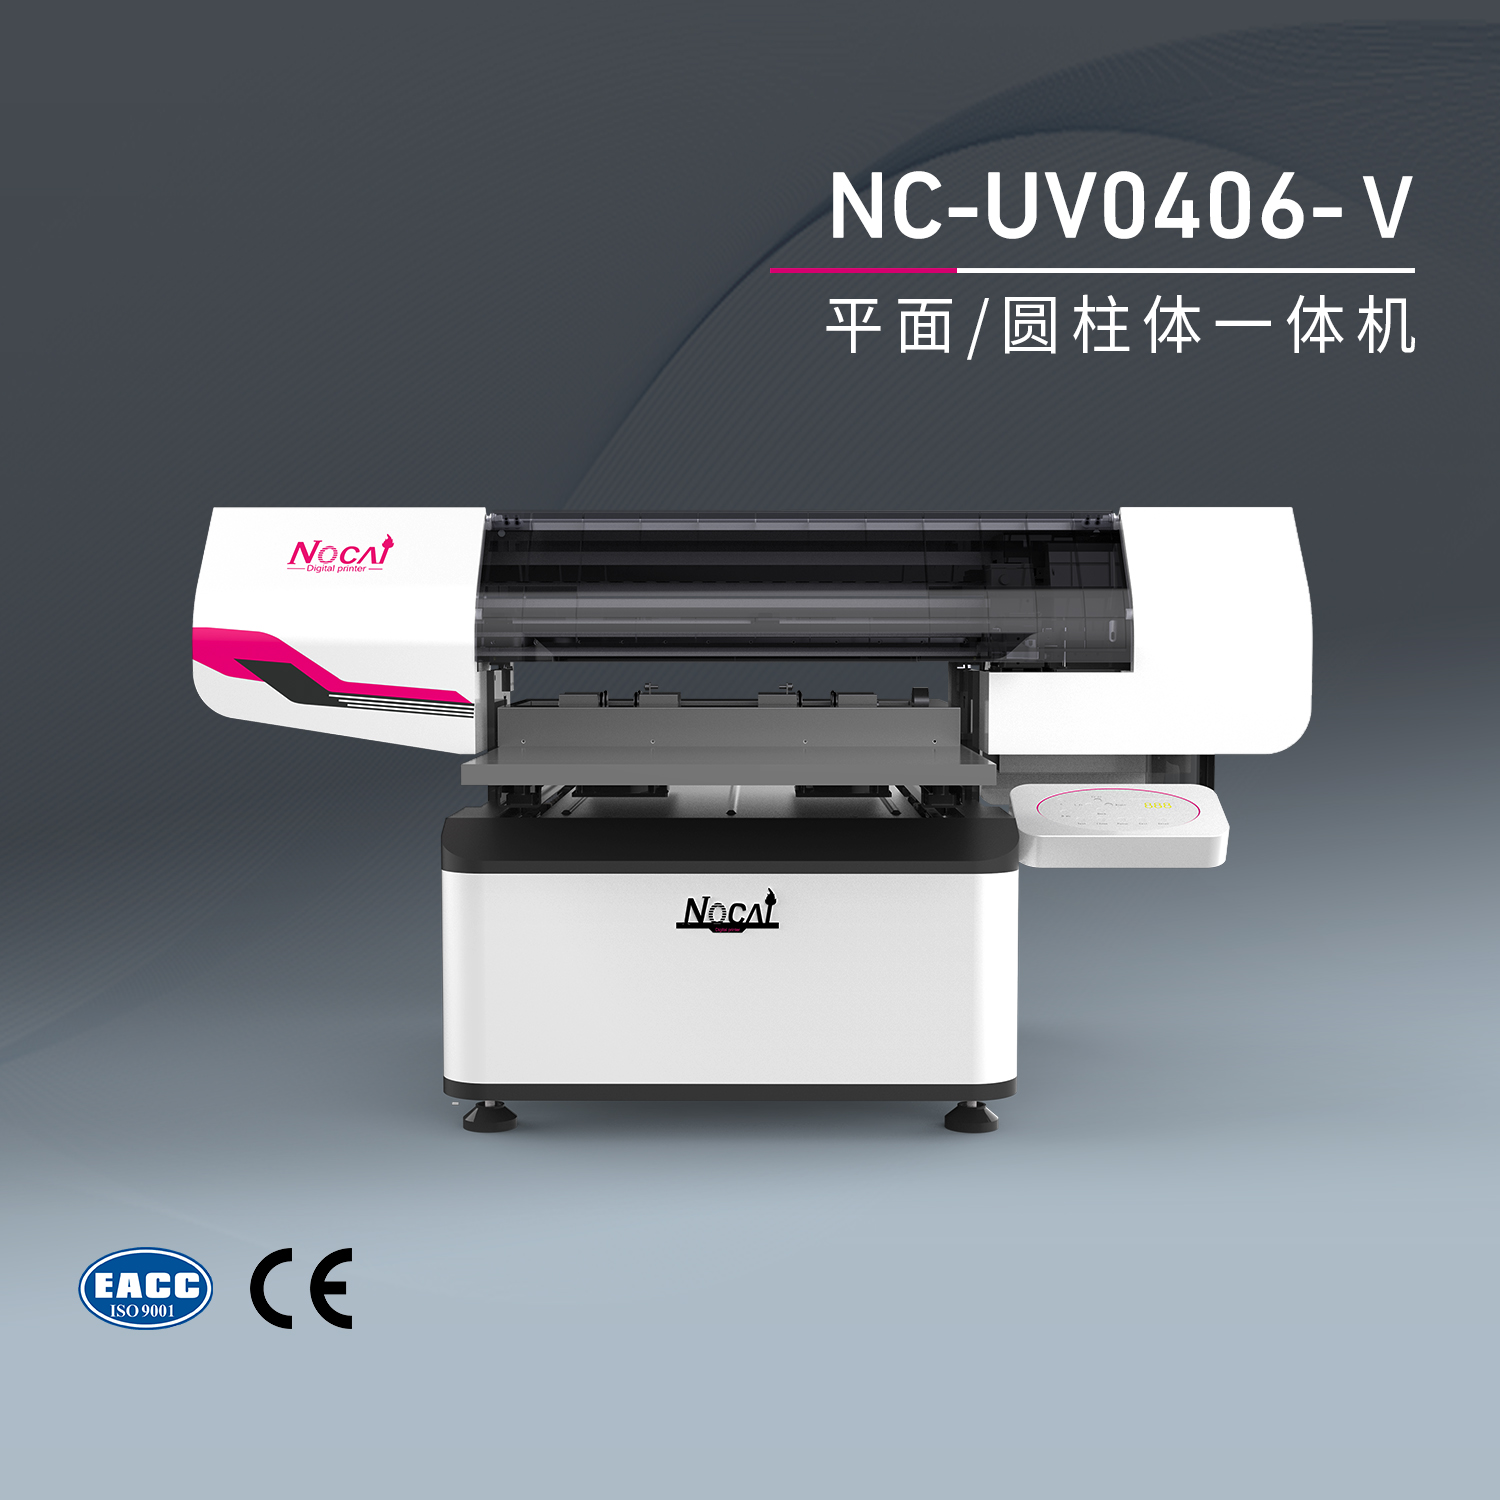 UV打印机能打印浮雕效果吗？